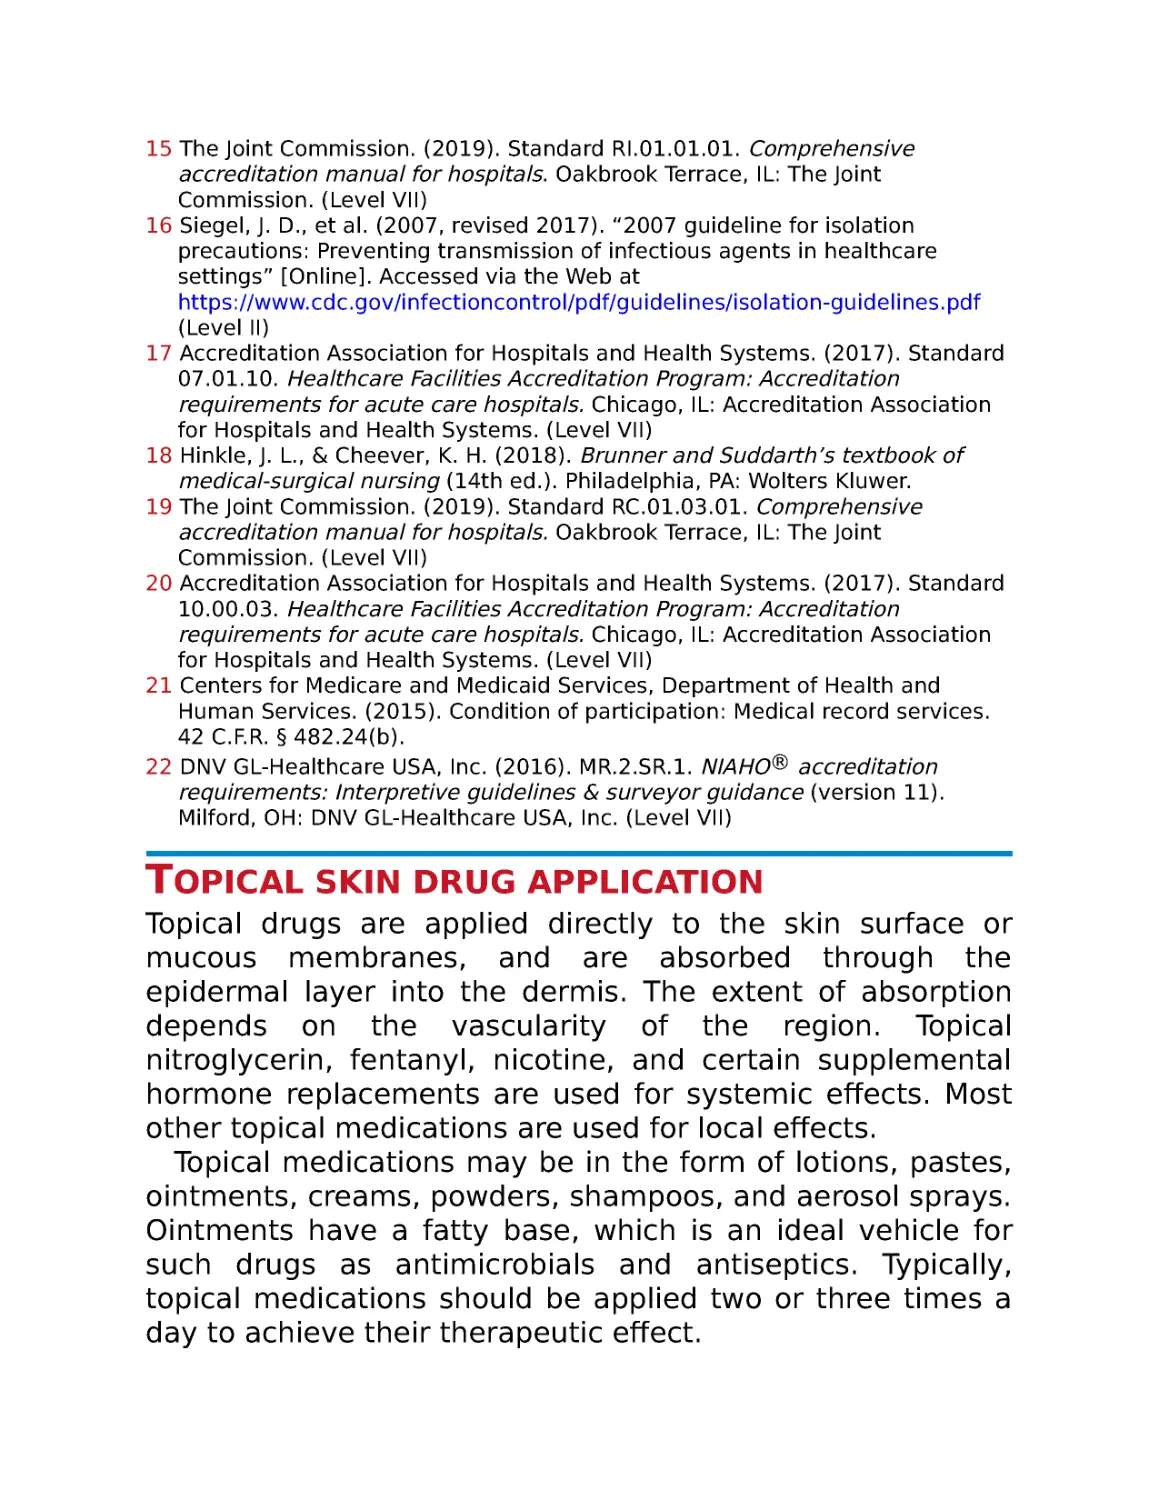 Topical skin drug application